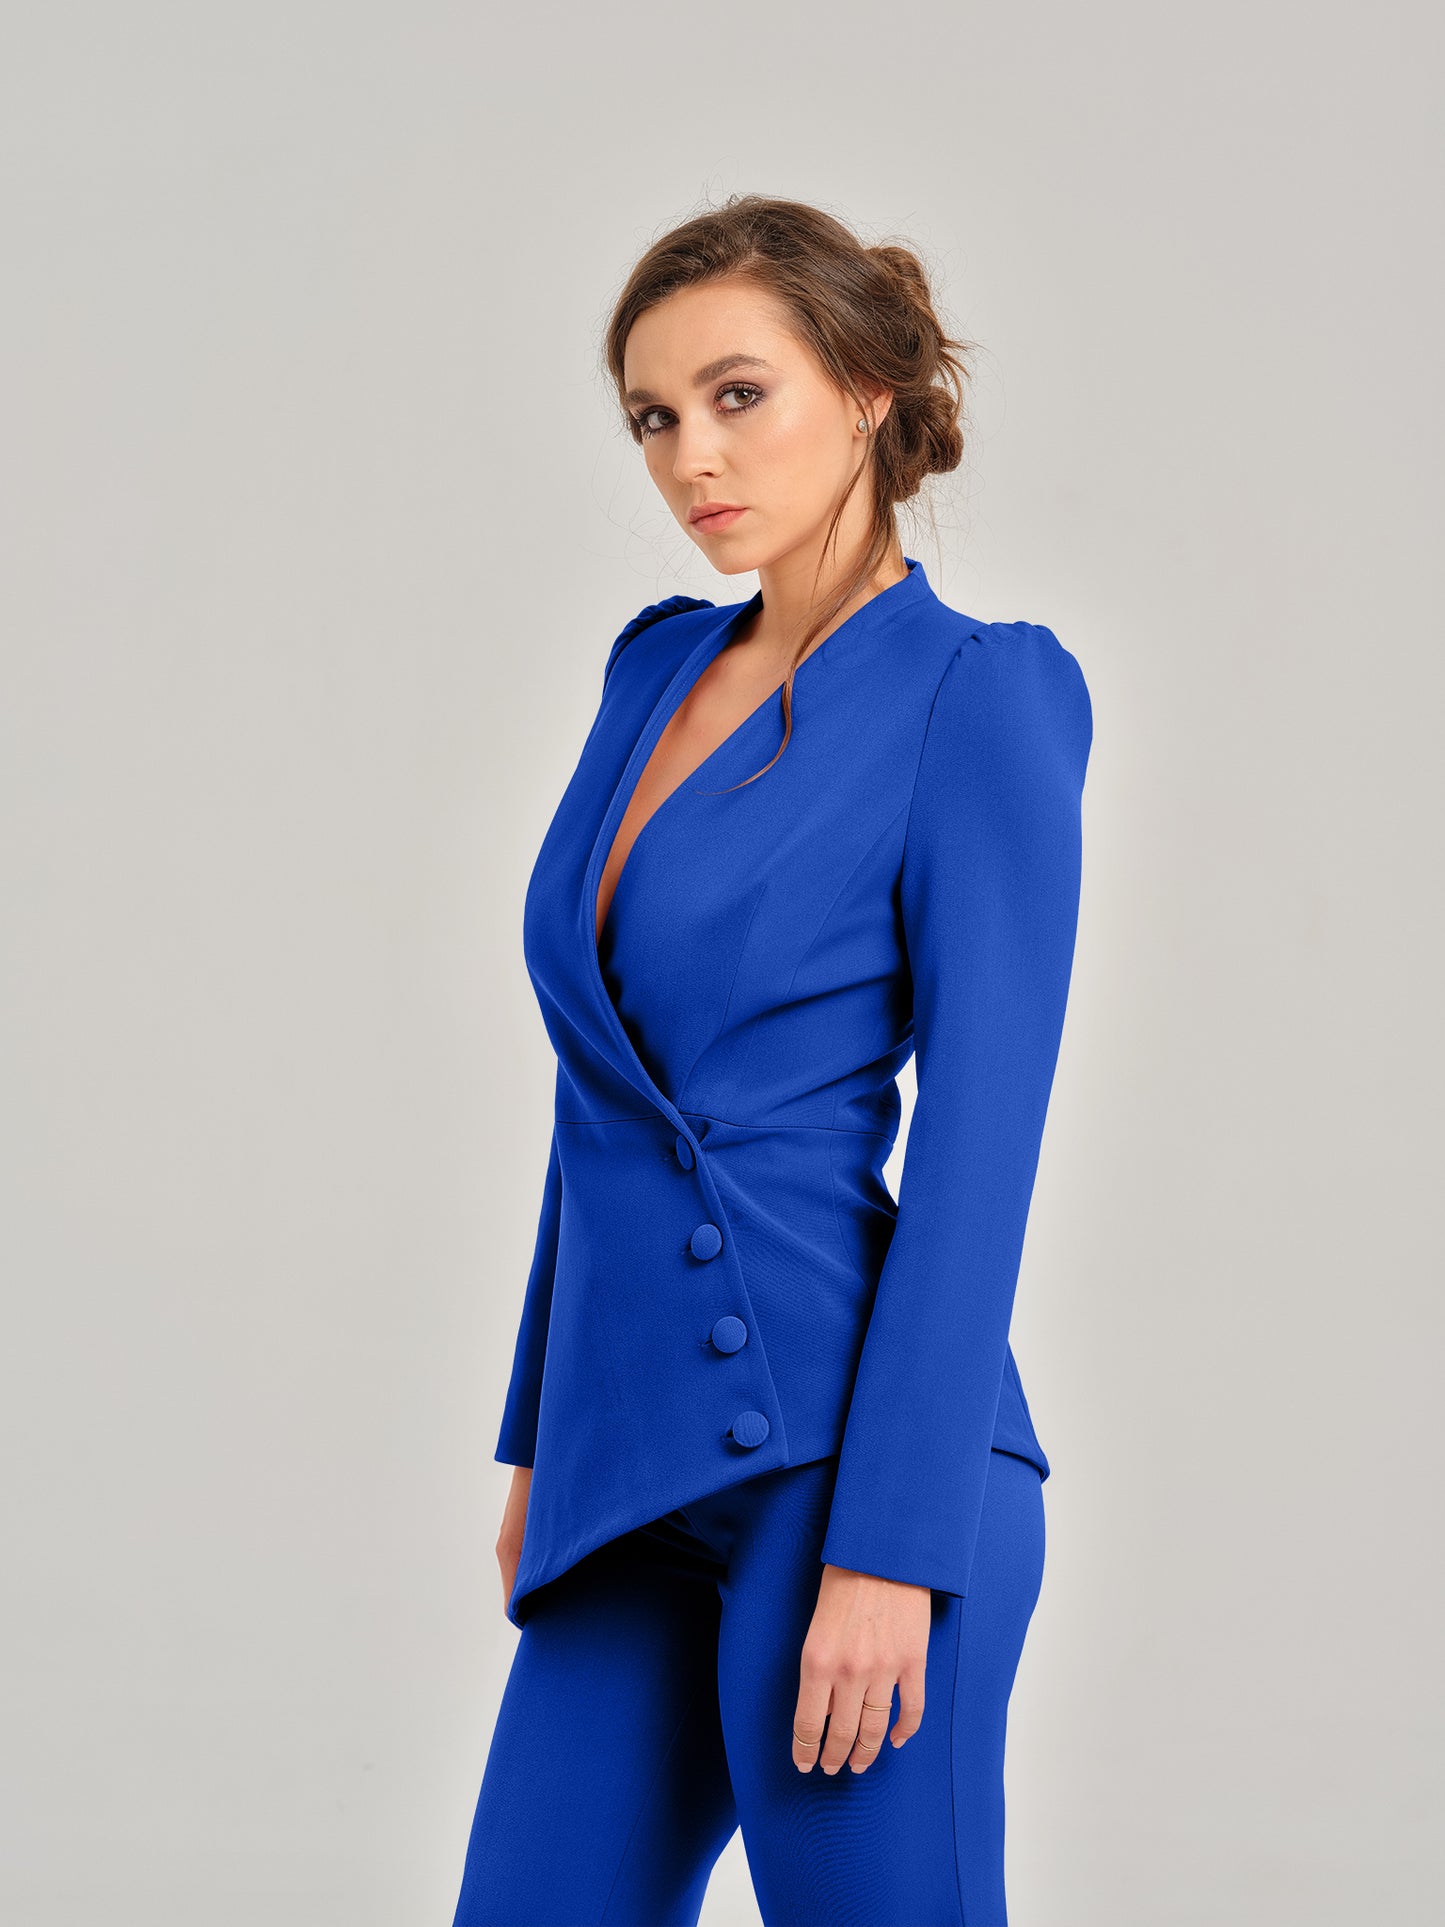 Royal Azure Timeless Asymmetric Blazer by Tia Dorraine Women's Luxury Fashion Designer Clothing Brand